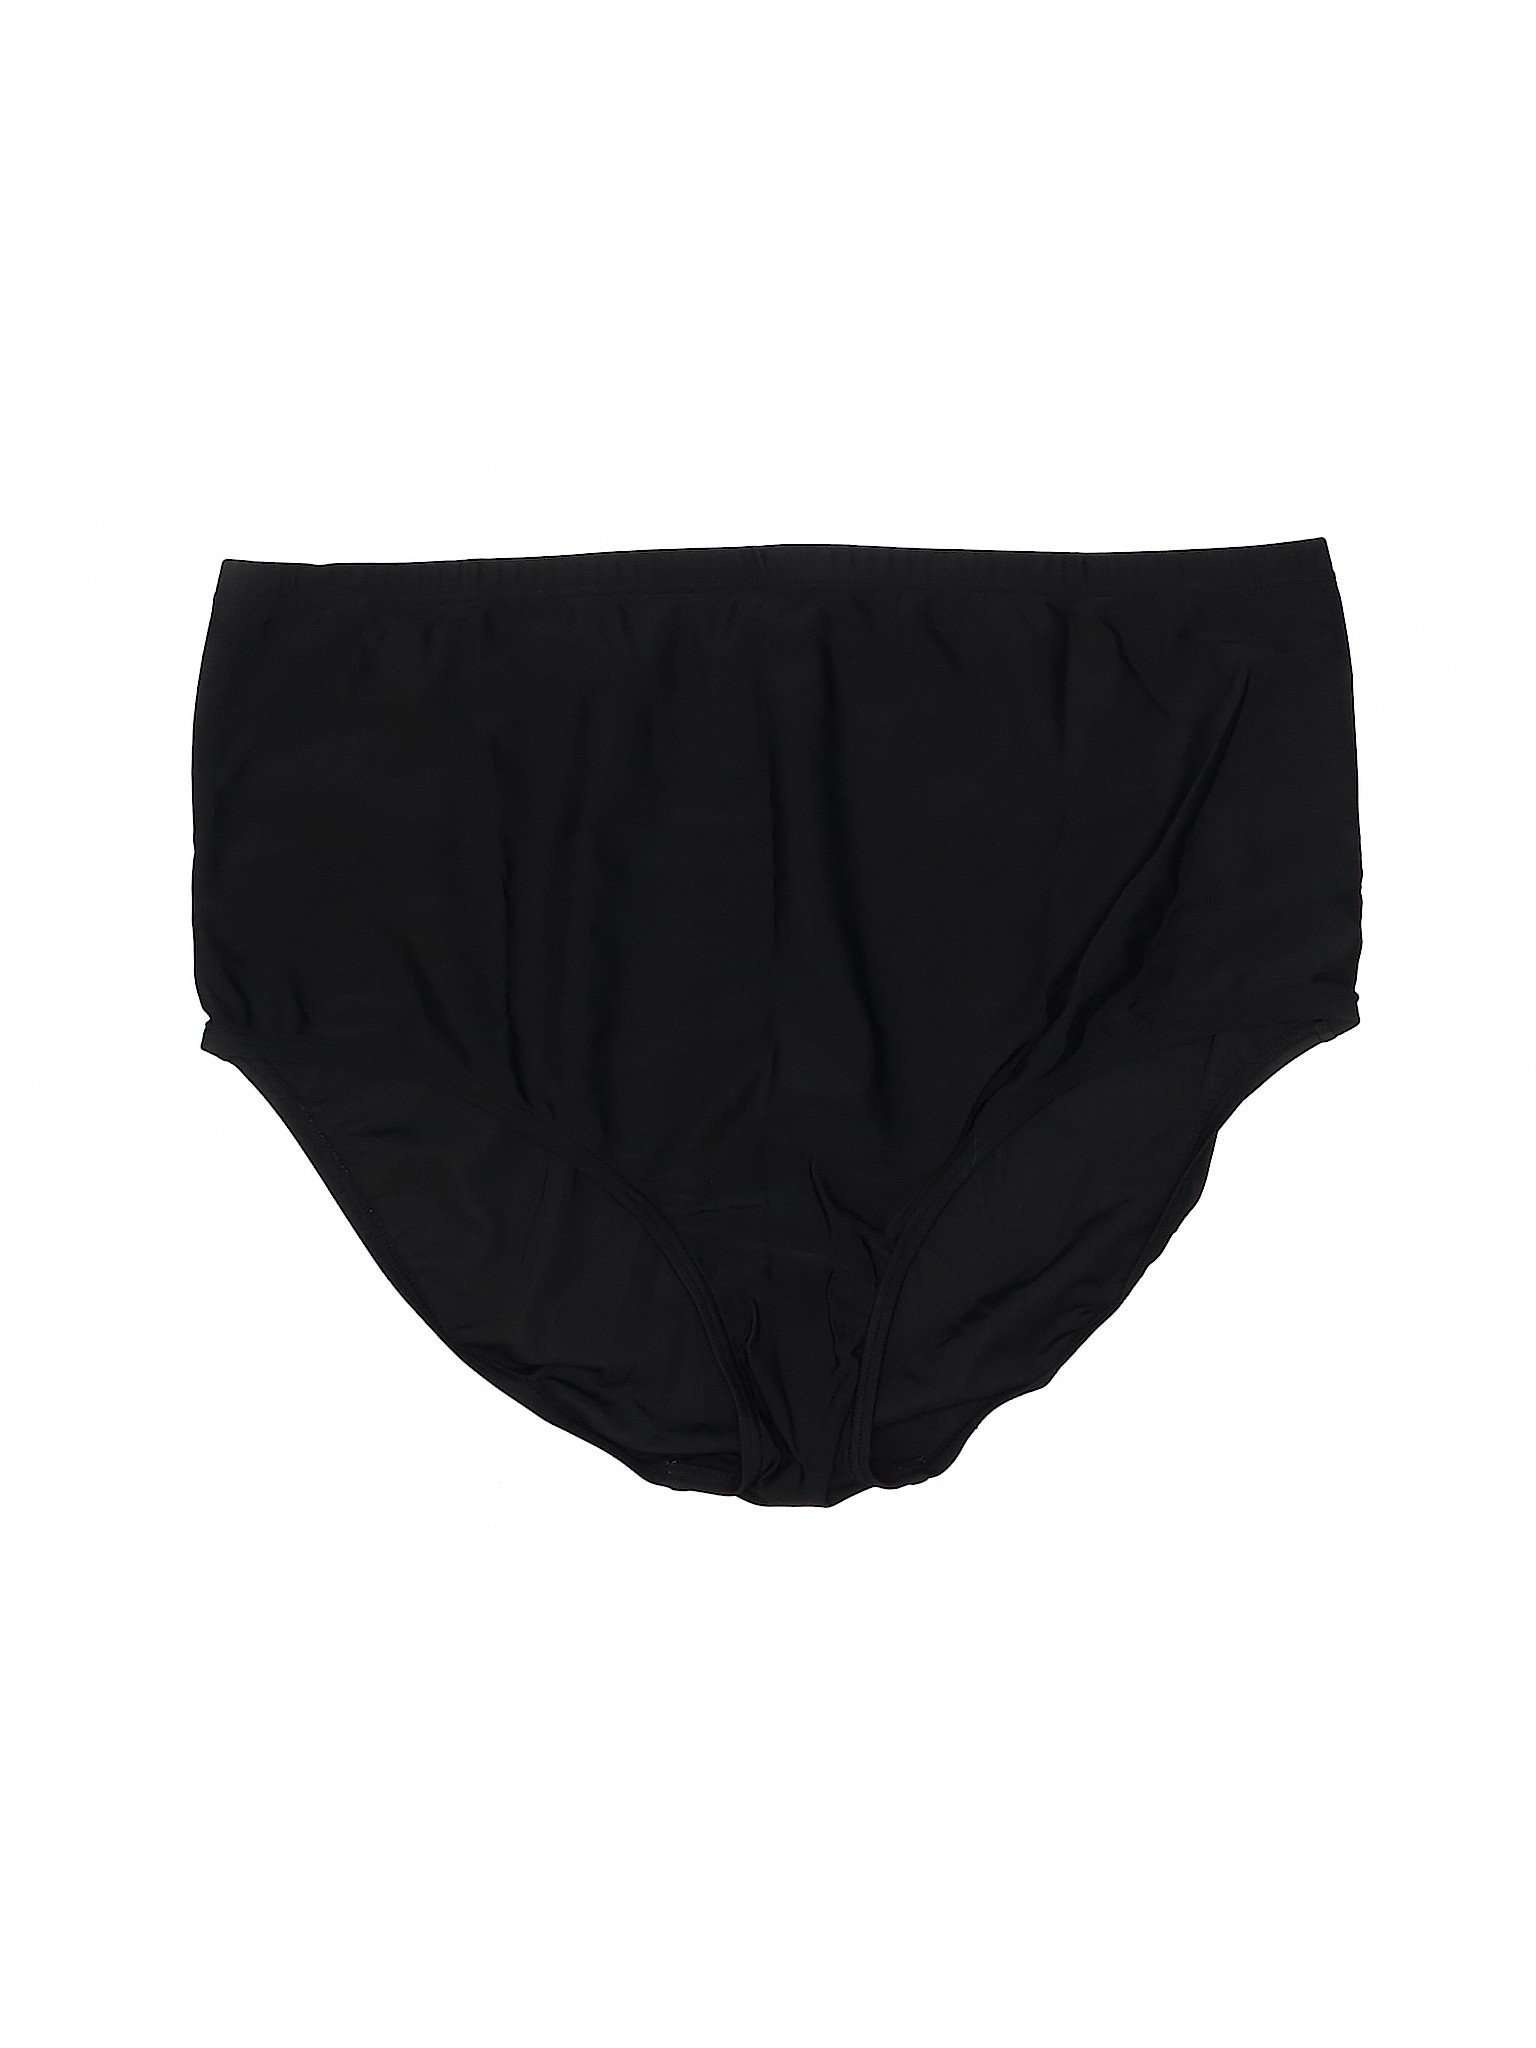 Christina Women Black Swimsuit Bottoms 50 eur Plus | eBay